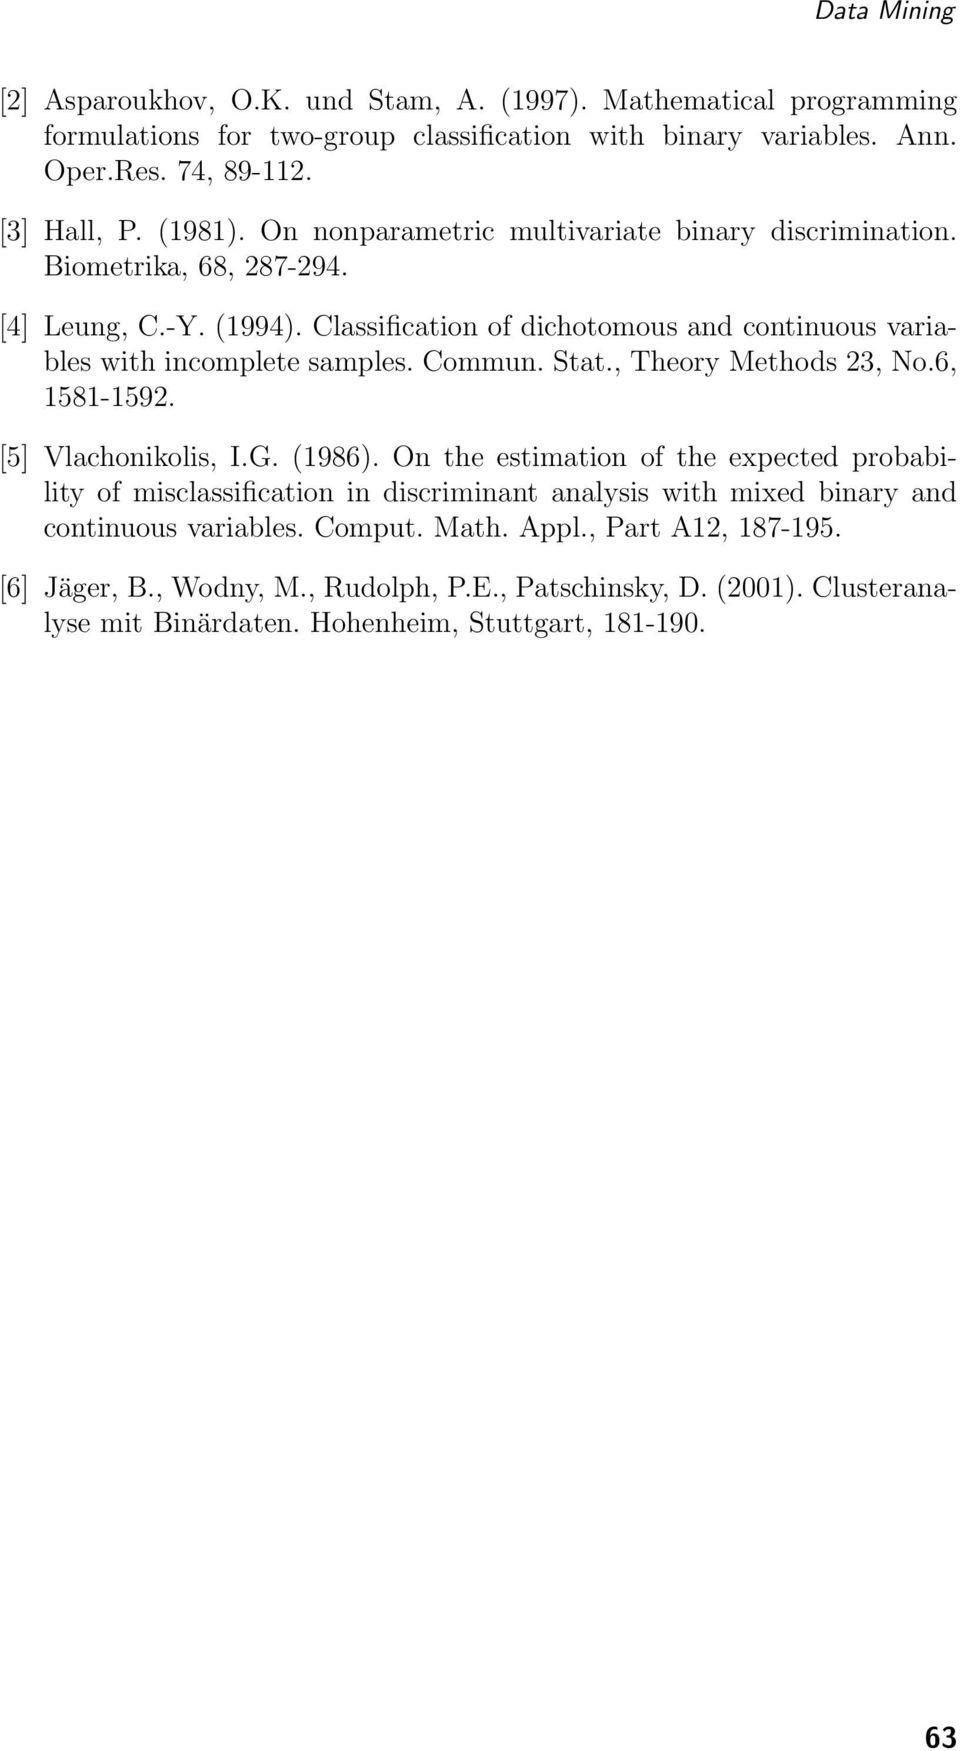 Commun. Stat., Theory Methods 23, No.6, 1581-1592. [5] Vlachonikolis, I.G. (1986).